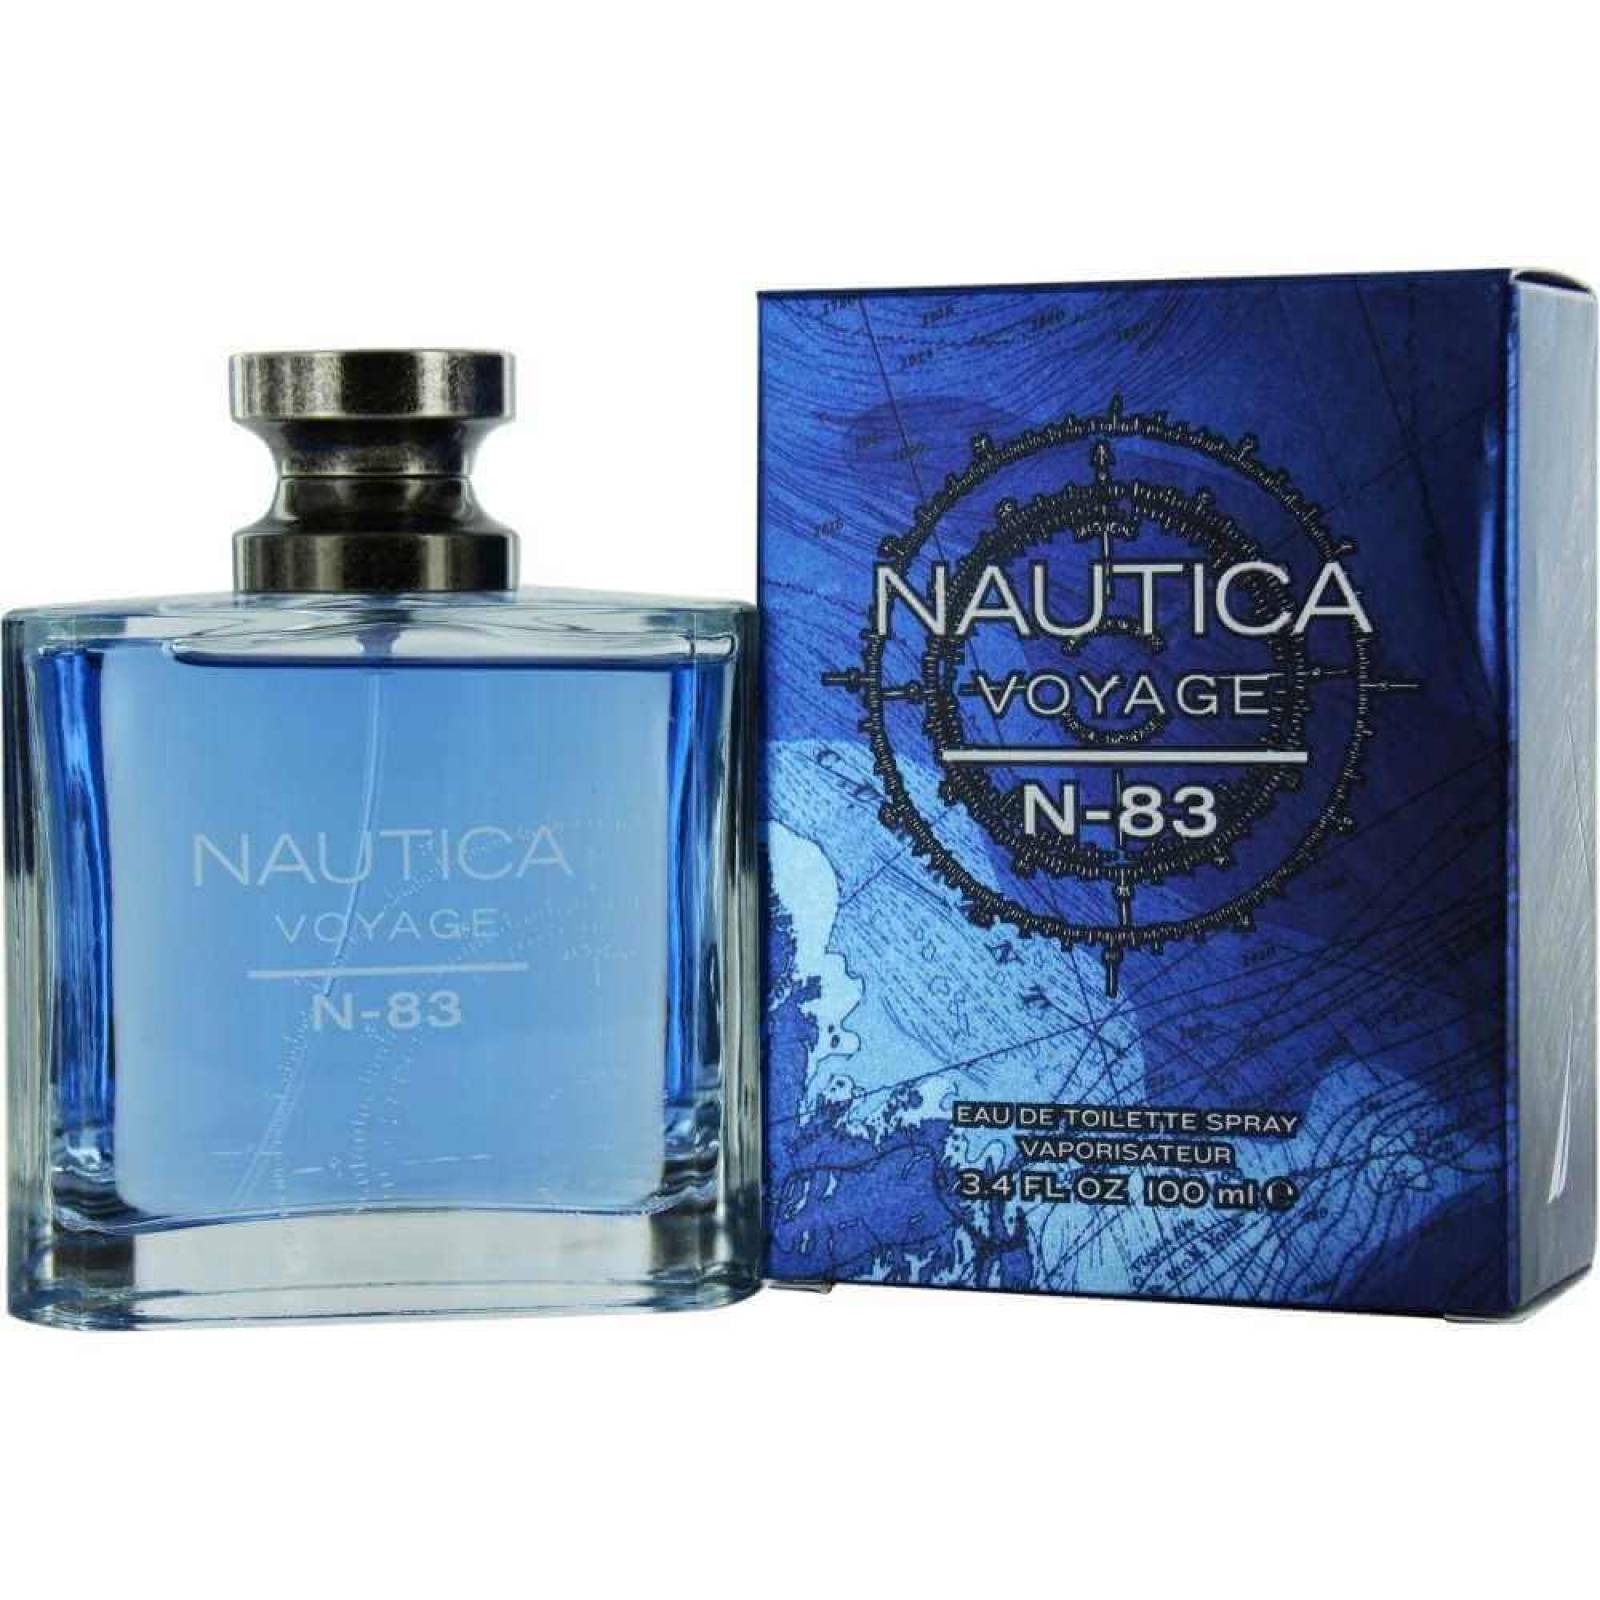 nautica voyage price in kuwait